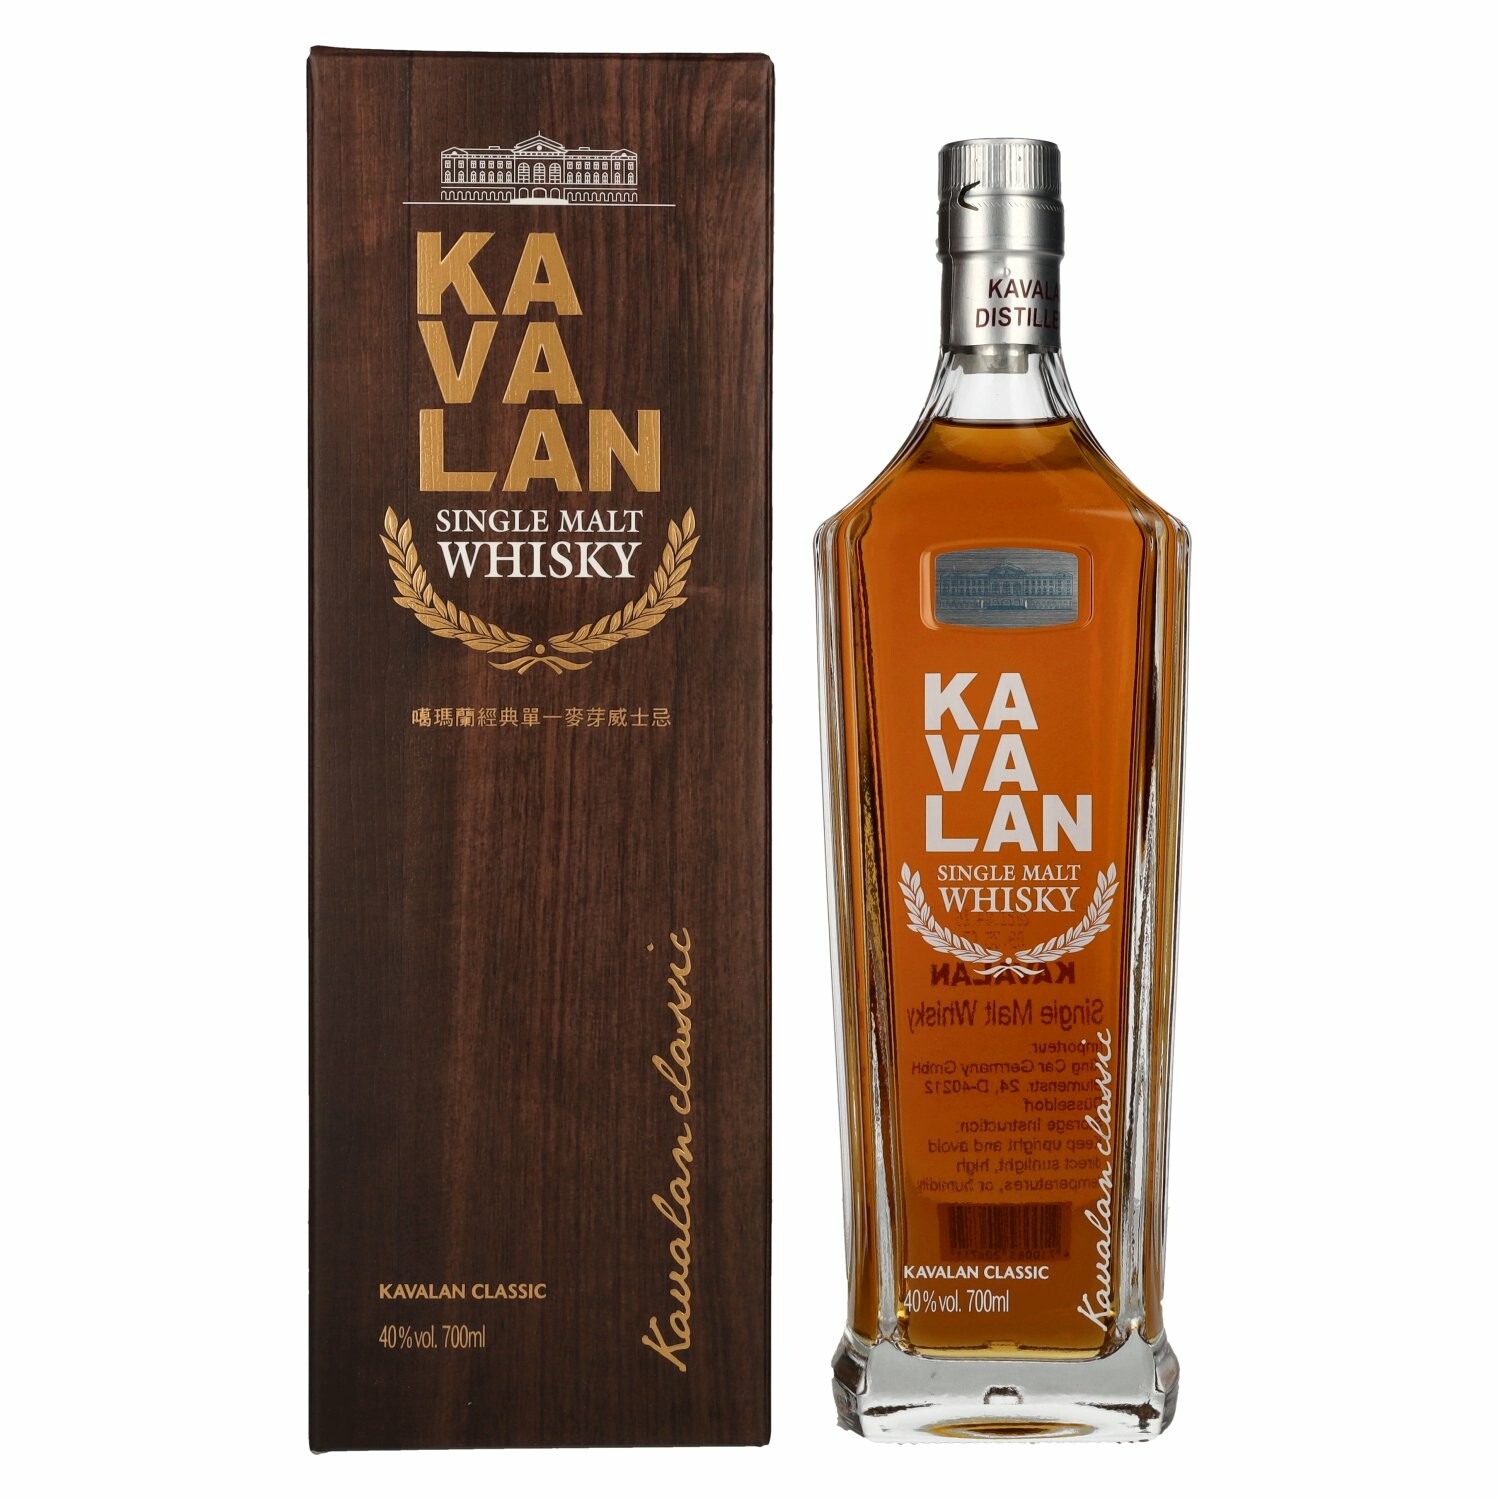 Kavalan Classic Single Malt Whisky 40% Vol. 0,7l in Giftbox